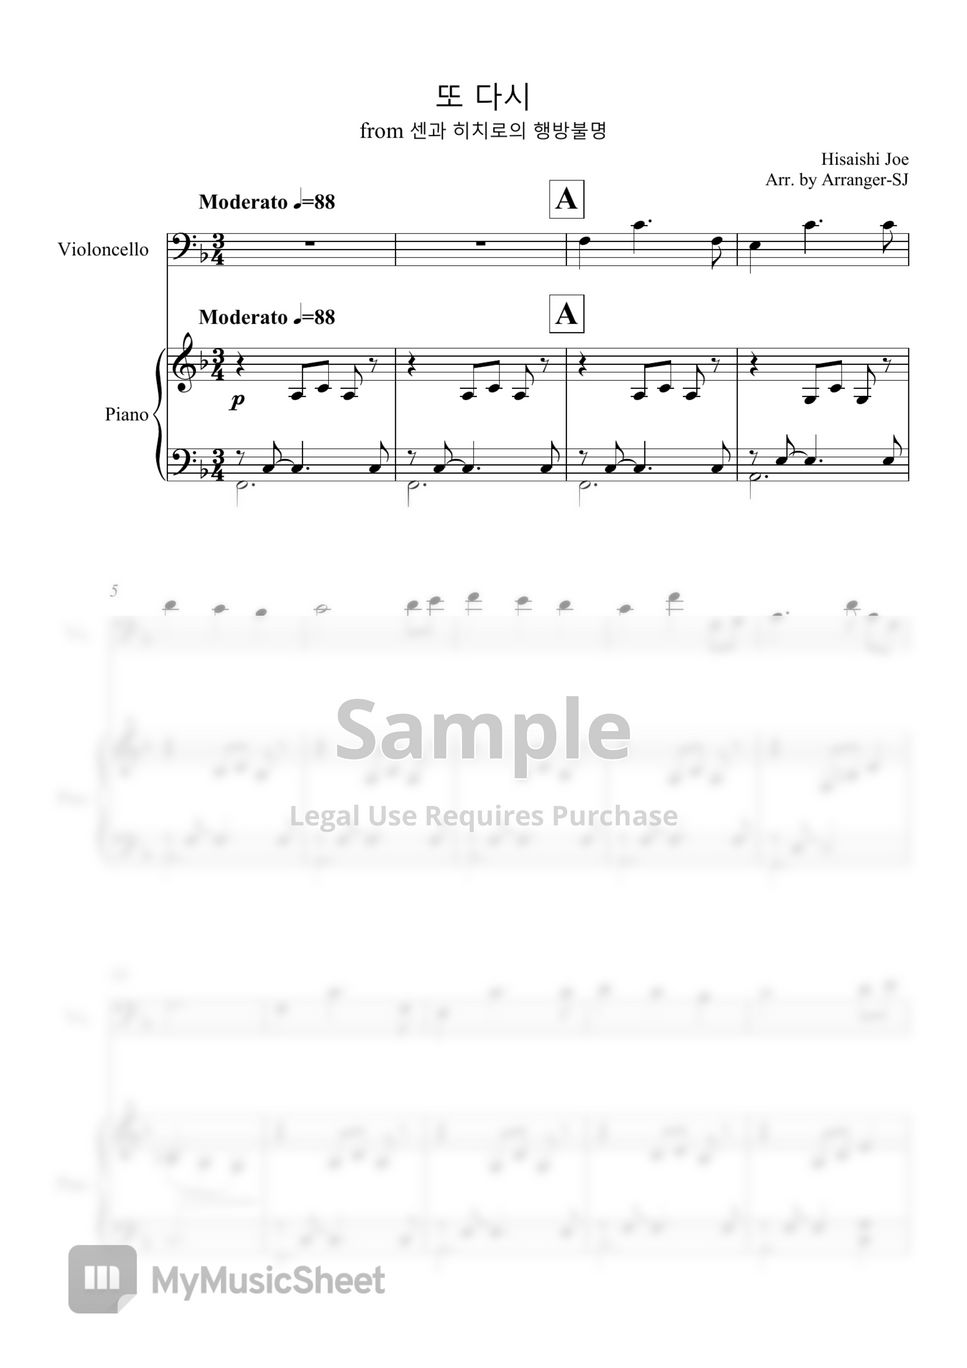 Hisaishi Joe - 또 다시 (Reprise) from 쎈과 히치로의 행방불명 (Duet for Cello & Piano) by Arranger-SJ